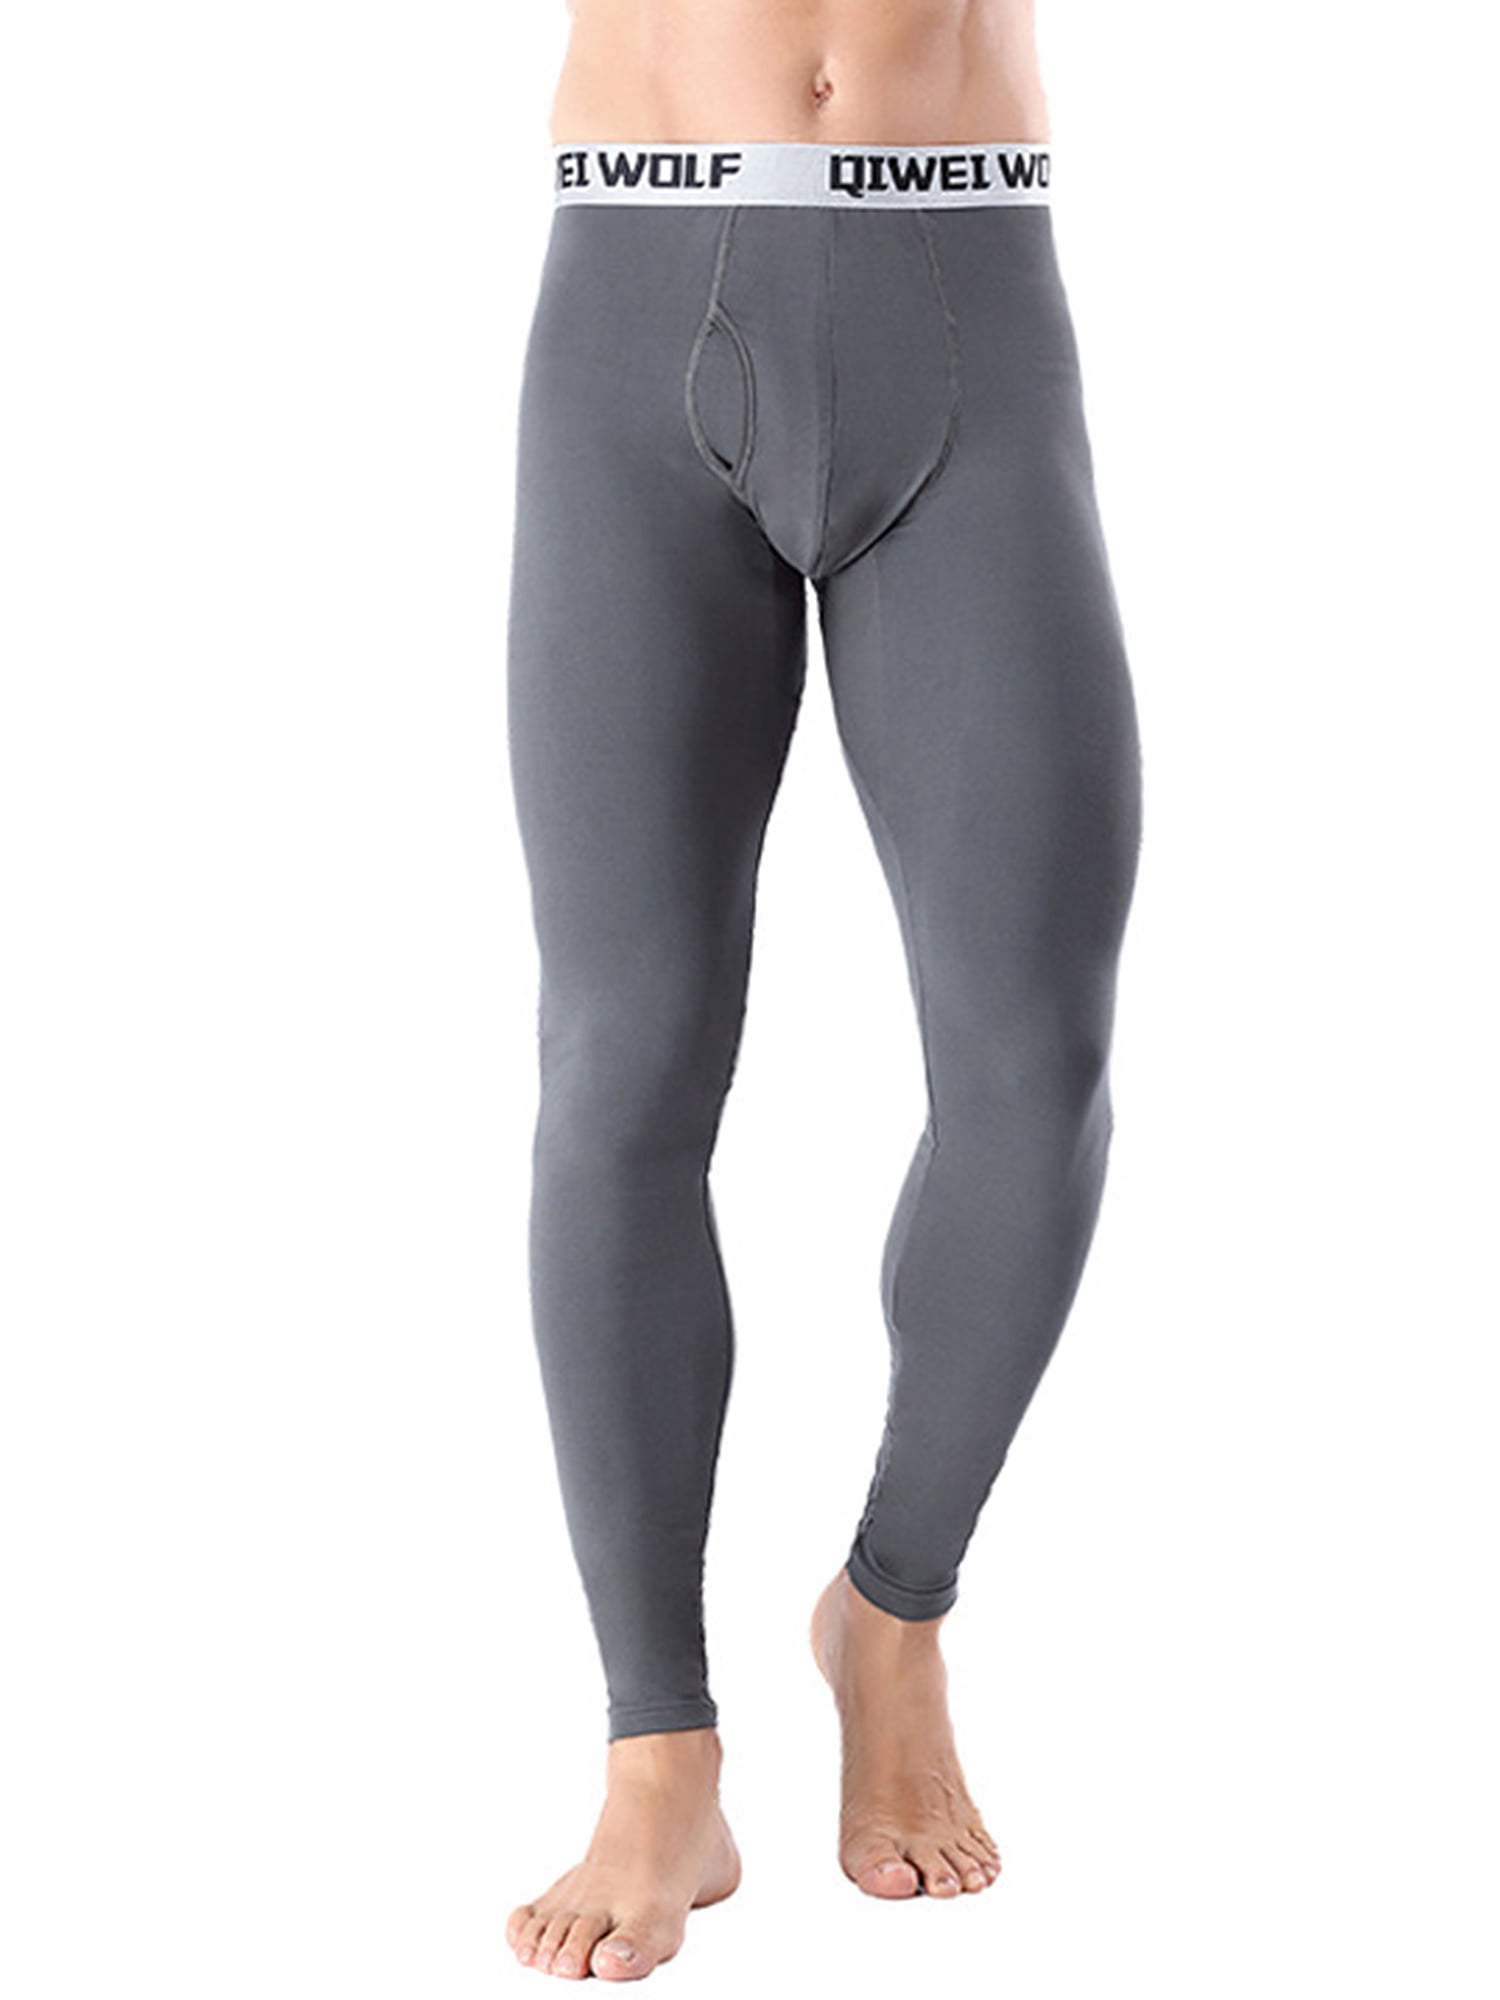 Details about   Men Compression Base Layer Bottoms Gym Sports Fitness Pants Leggings Trouser 